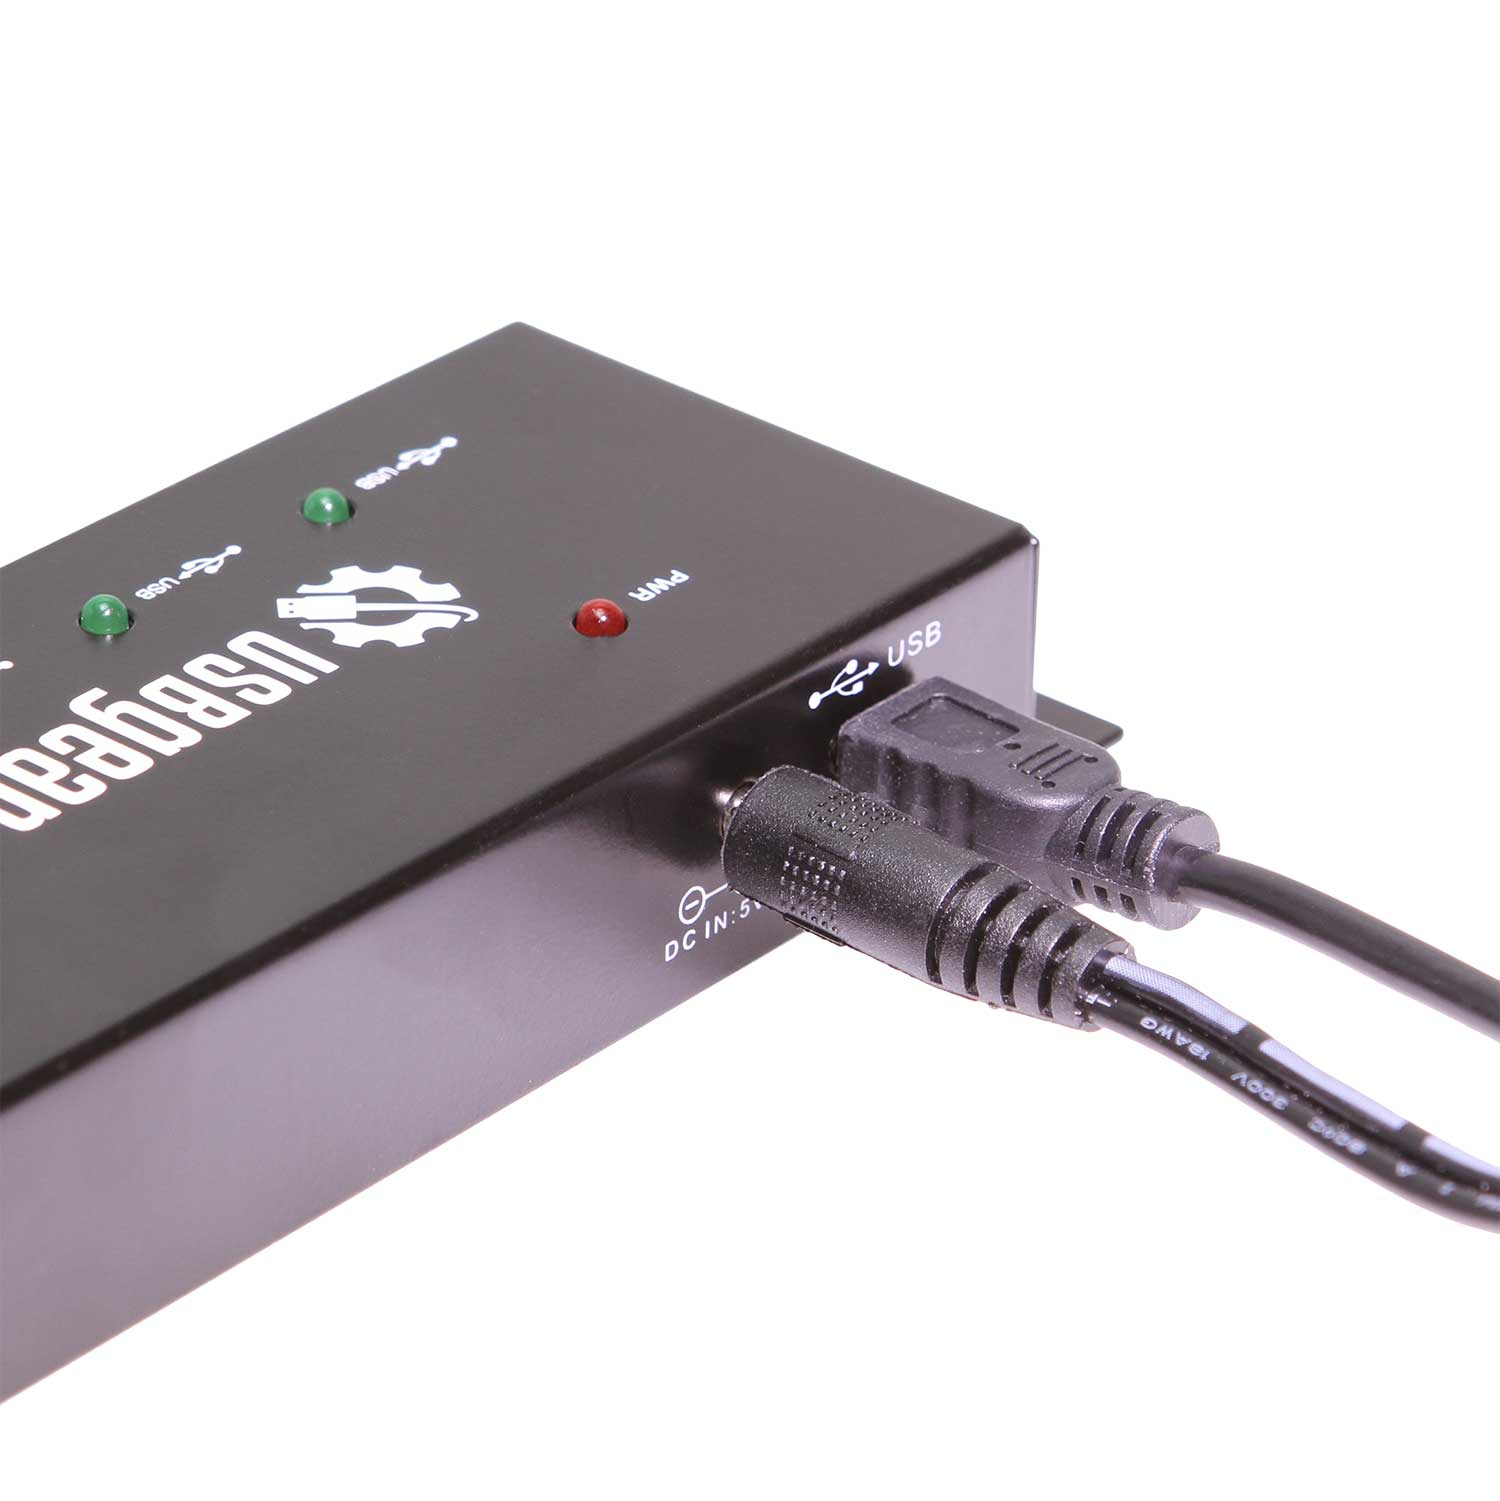 Cable Length 30cm Color : Black 4 USB 2.0 Hi-Speed Port HUYUNJIA-US Suitable for Tablet PC 4 Port USB 2.0 HUB